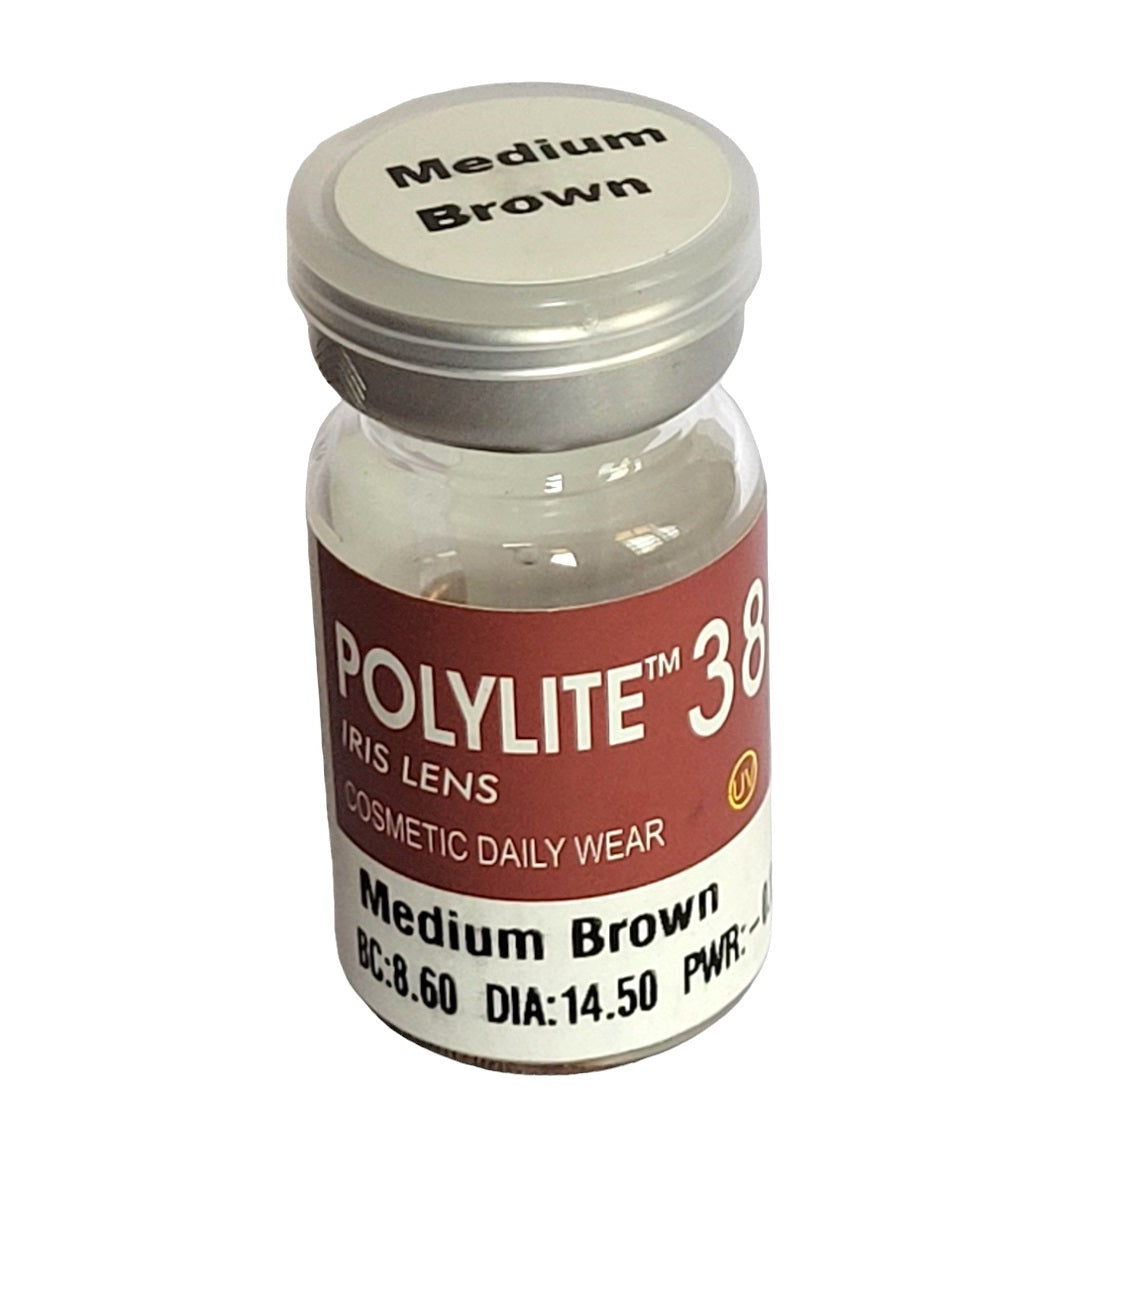 Prosthetic Contact lenses Medium Brown Polylite 38